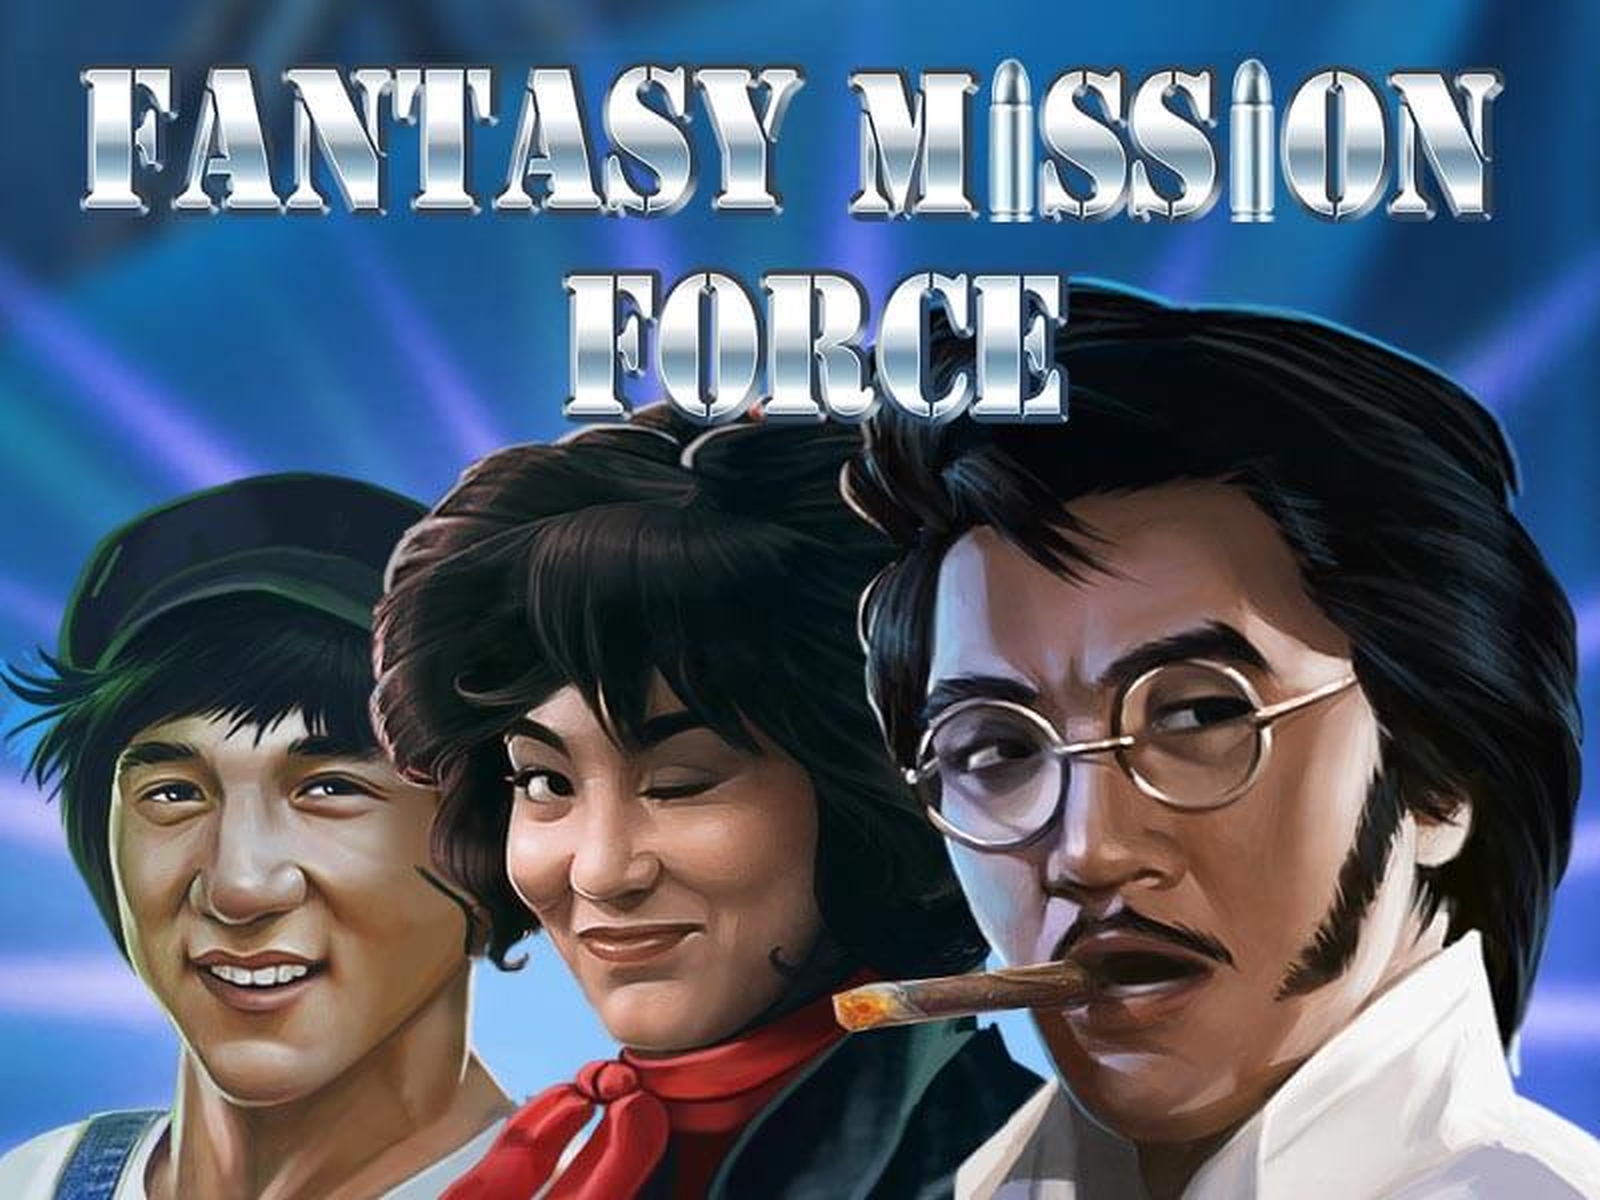 Fantasy Mission Force demo